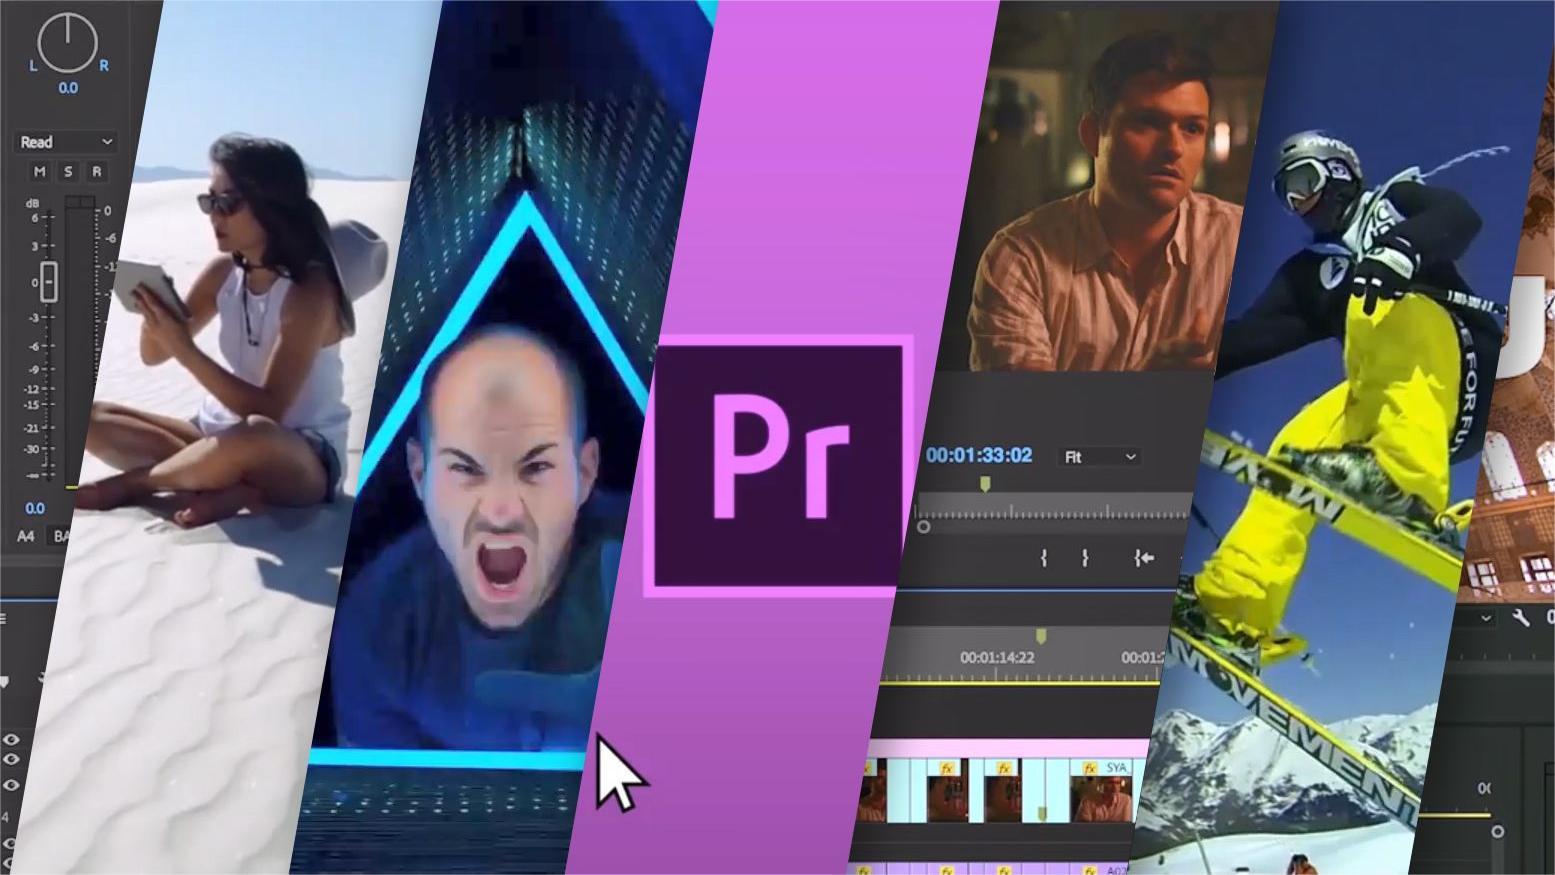 Adobe Premiere Pro CS6汉化版 6.1 简中版